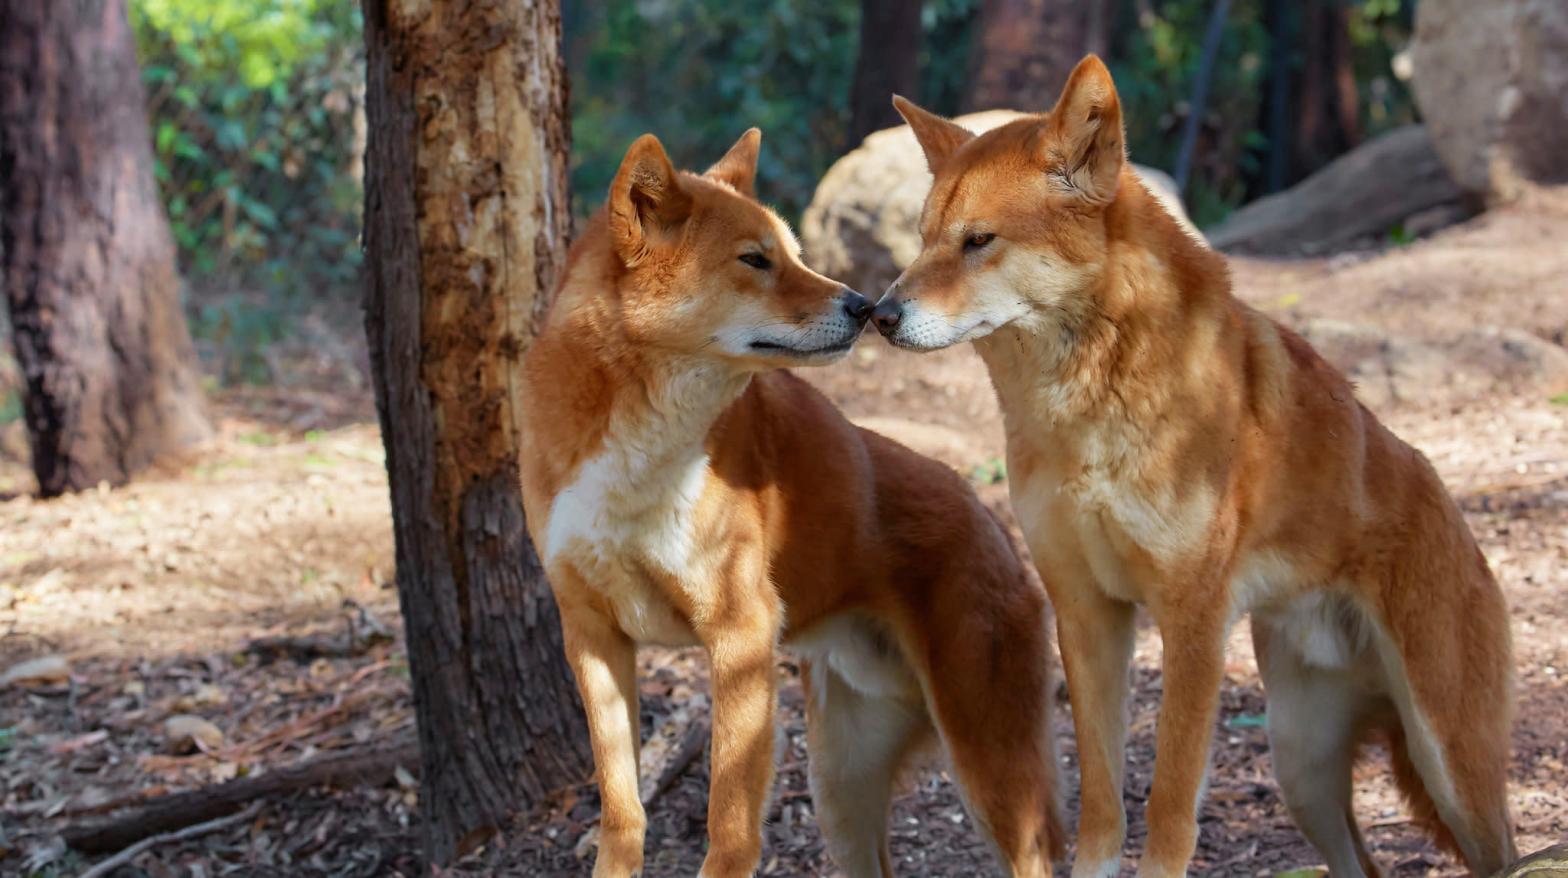 A pair of dingoes. (Image: Robert Lynch, Fair Use)